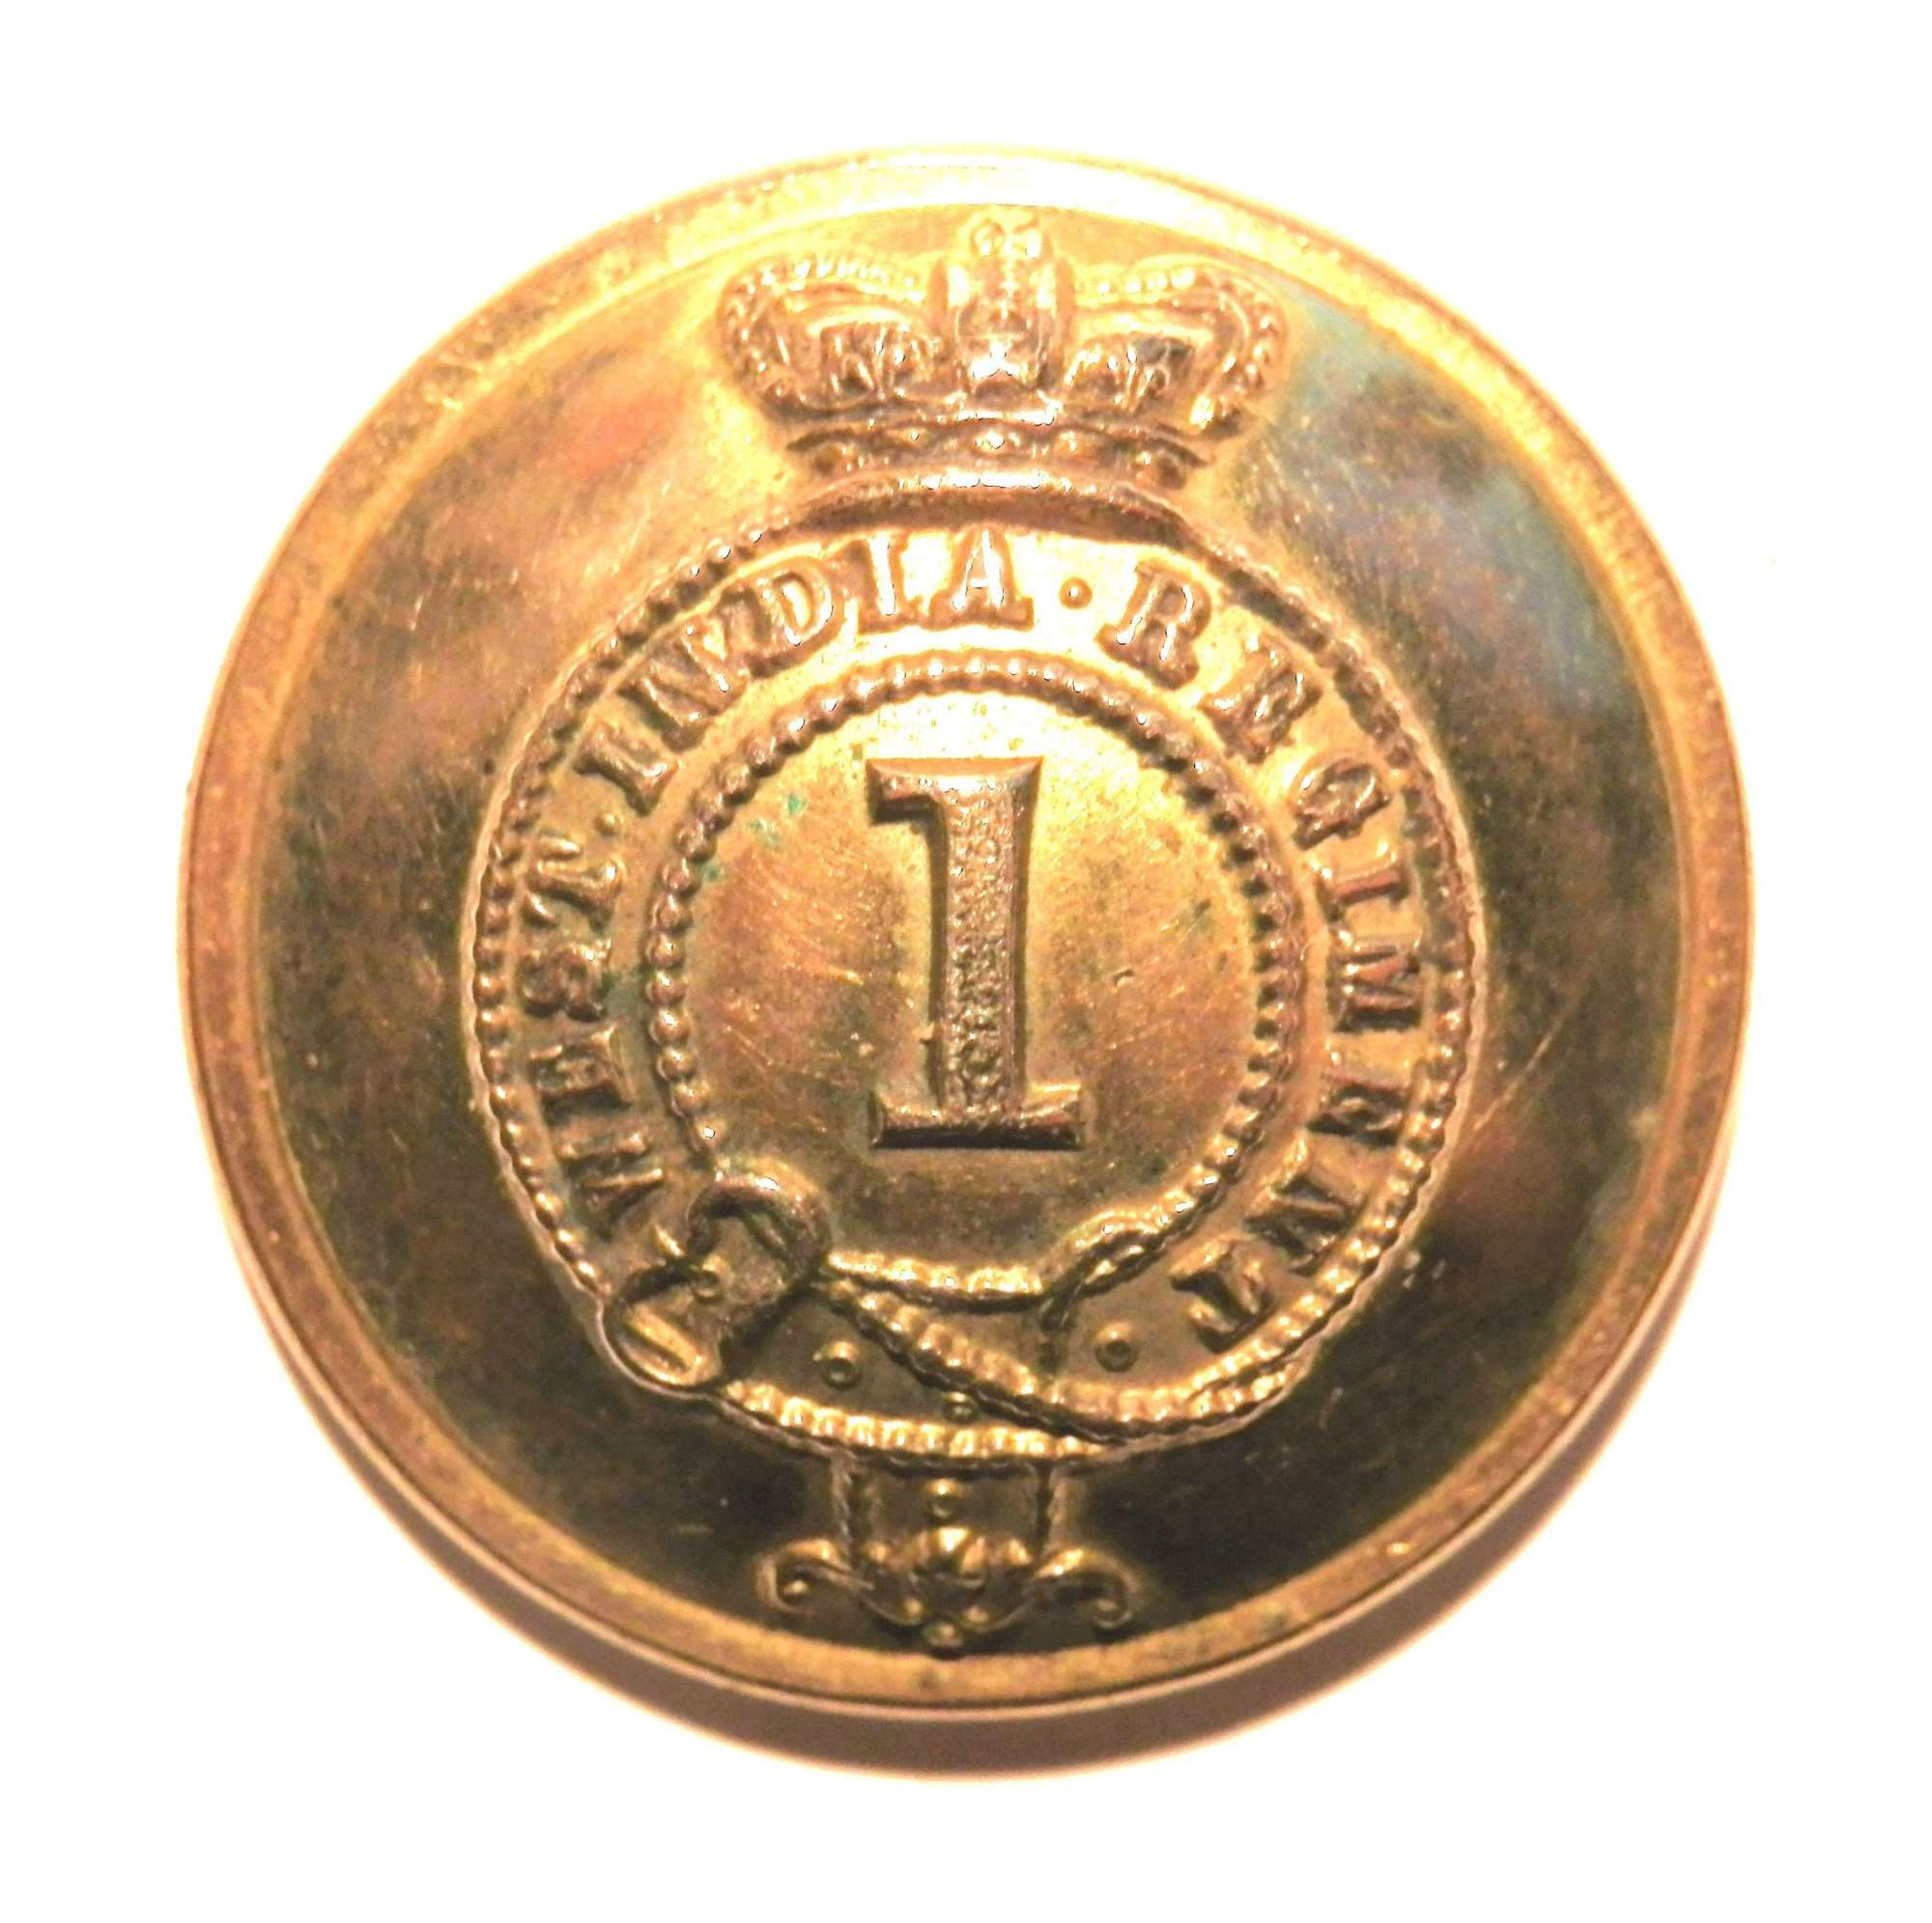 1st West India Regiment Officers Gilt Button.